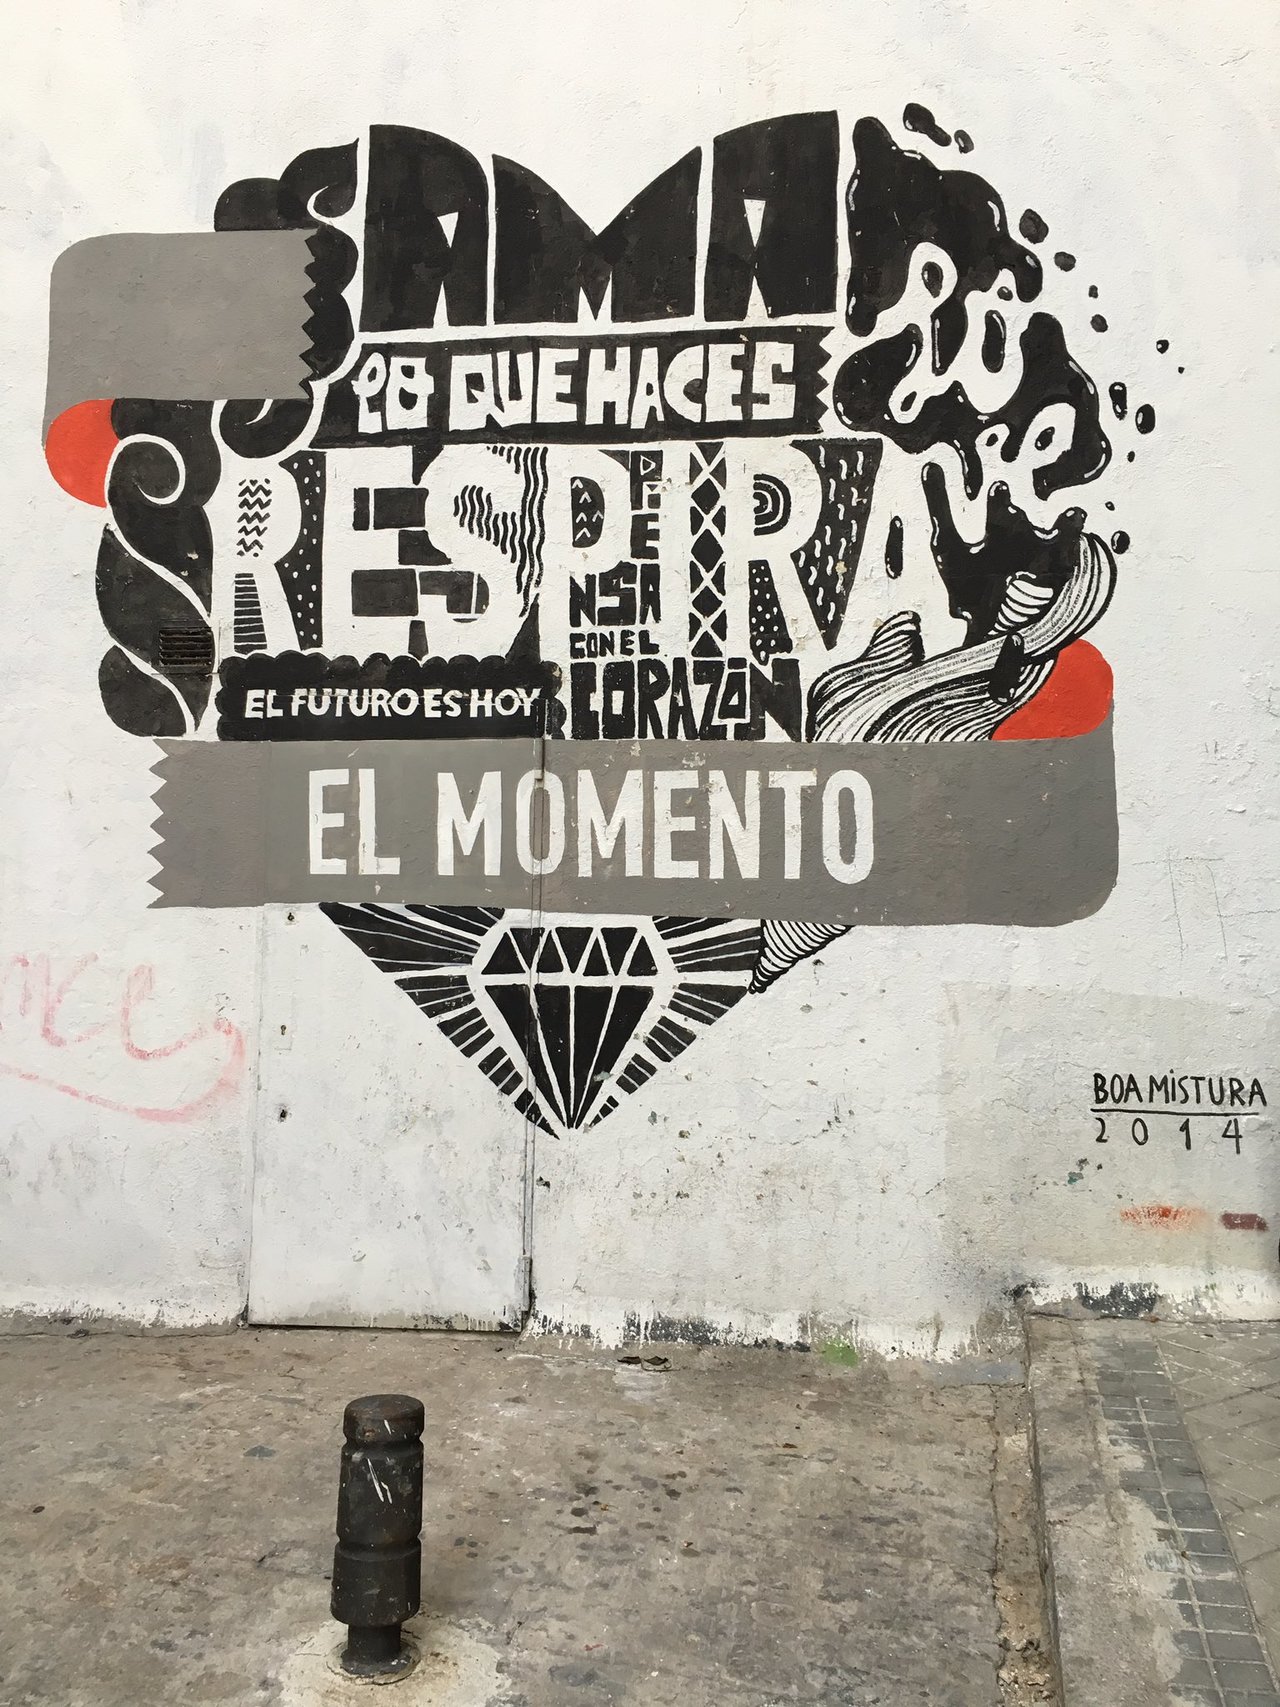 Lovely typographic graffiti in Madrid by @BOAMISTURA #graffiti #typograpjy #streetart #Madrid #Spain https://t.co/PGFUjkjoRg